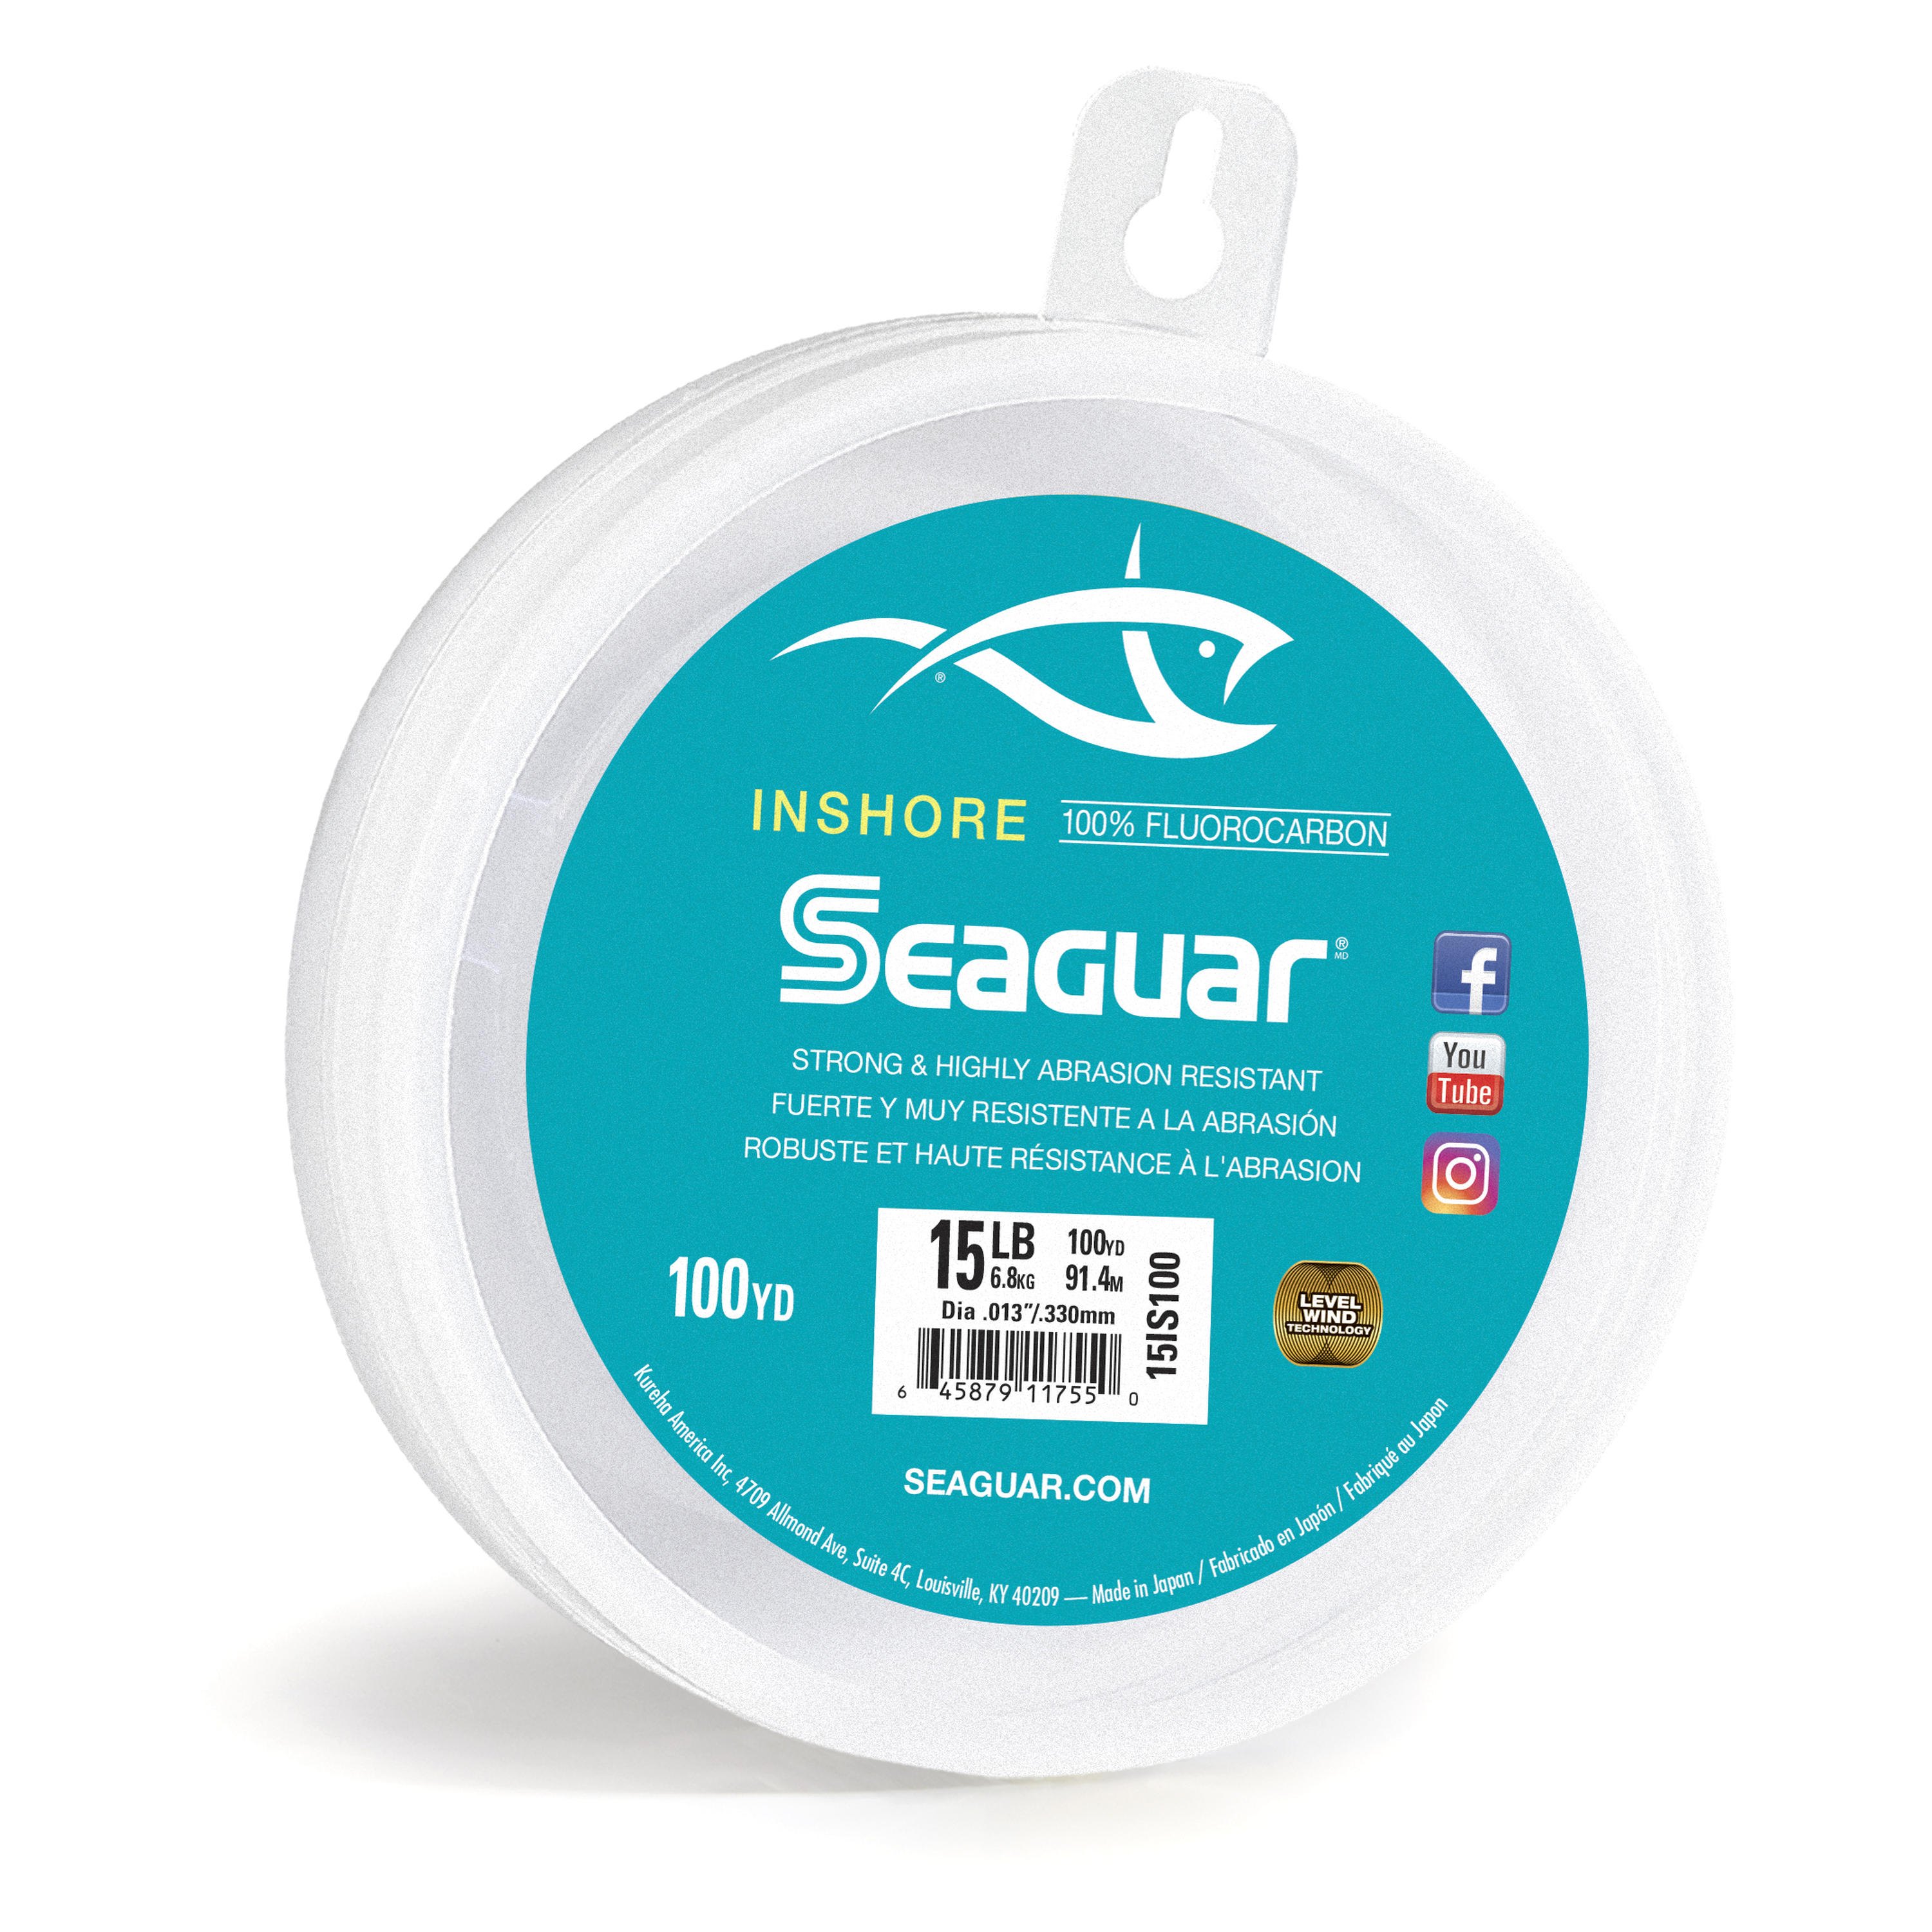 Seaguar® 15IS100 - Inshore 100 yd 15 lb Clear Fluorocarbon Leader Line 